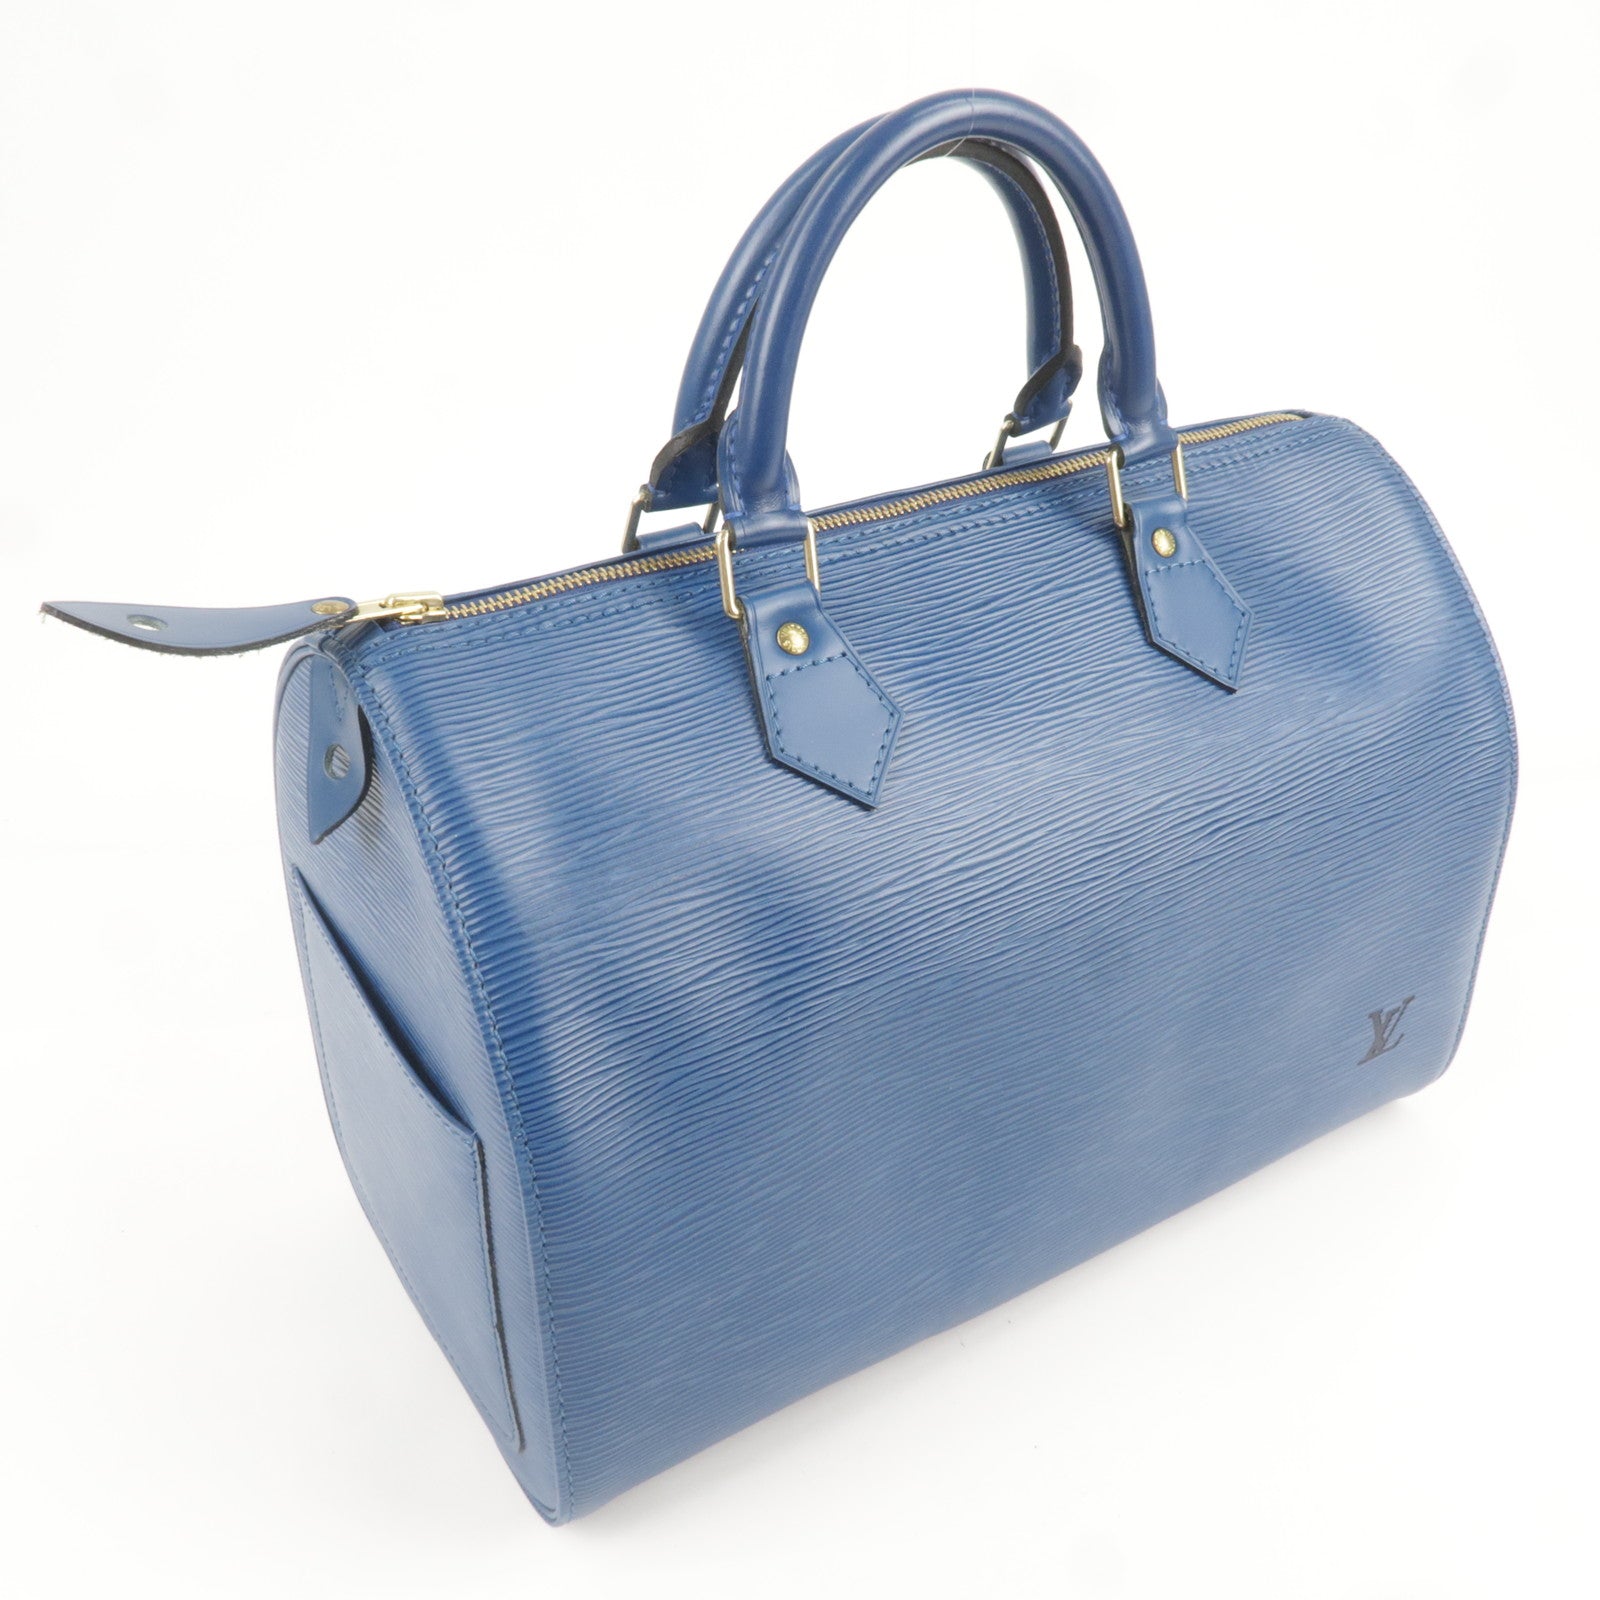 LOUIS VUITTON Handbag M43005 Toledo Blue Epi Leather Boston bag